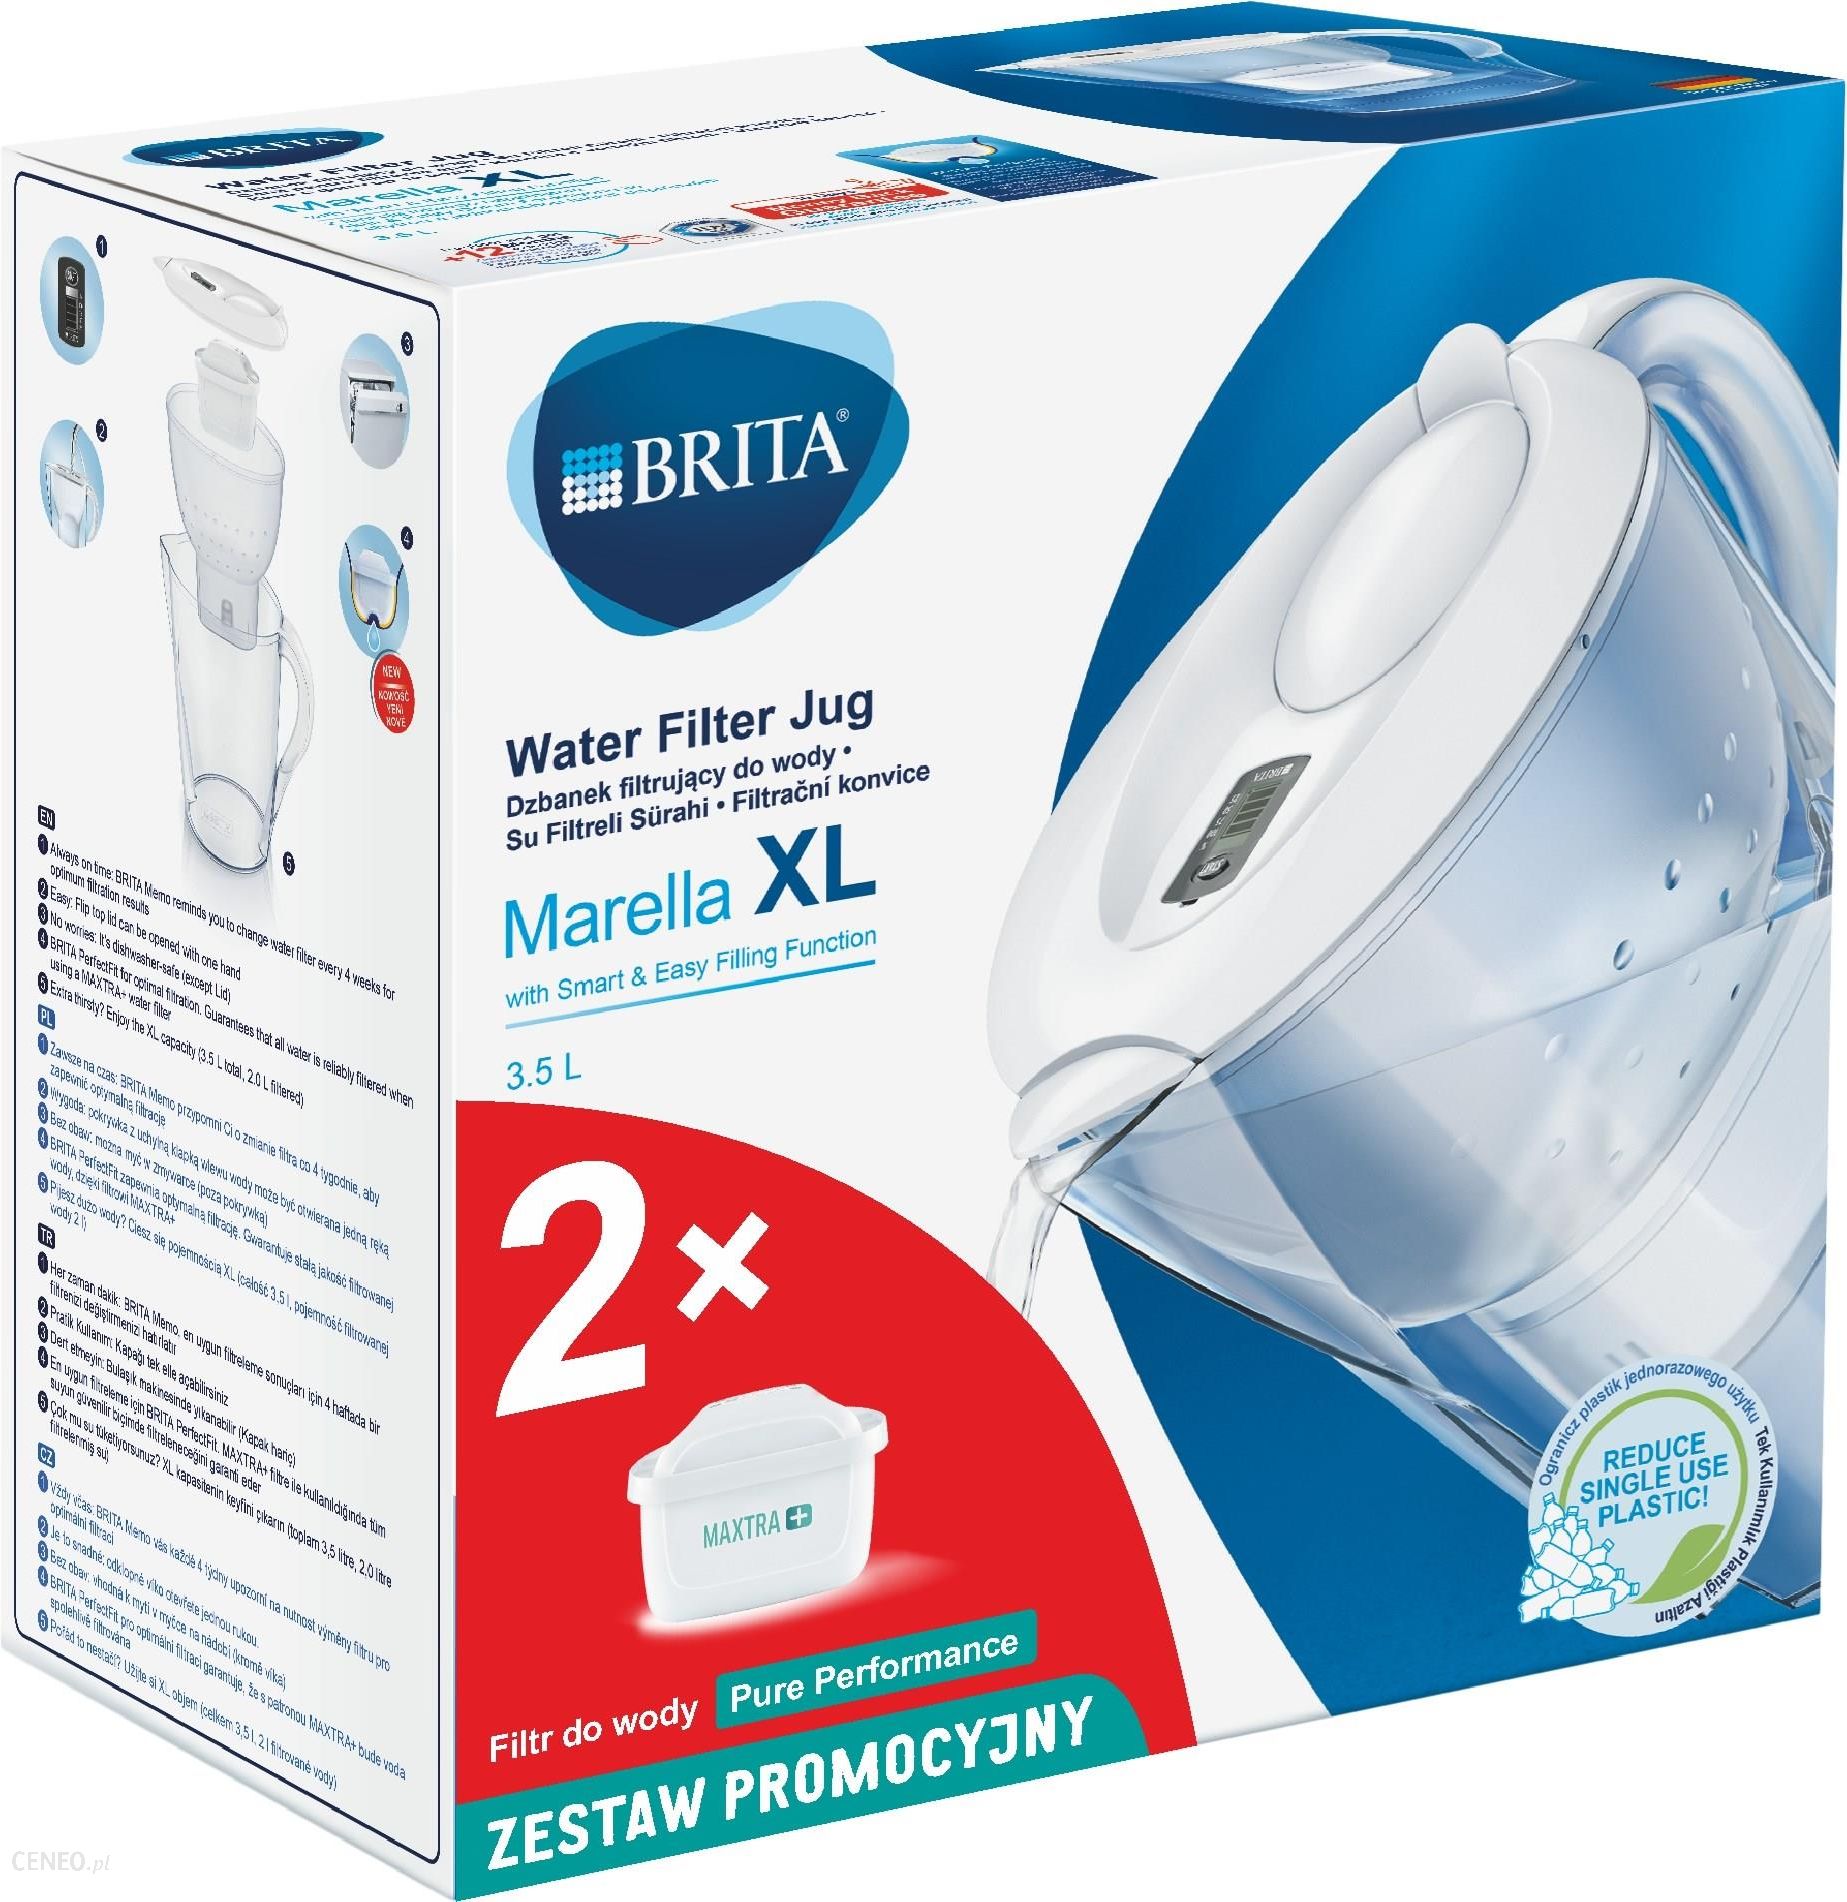 BRITA Marella XL biały + 2 filtry